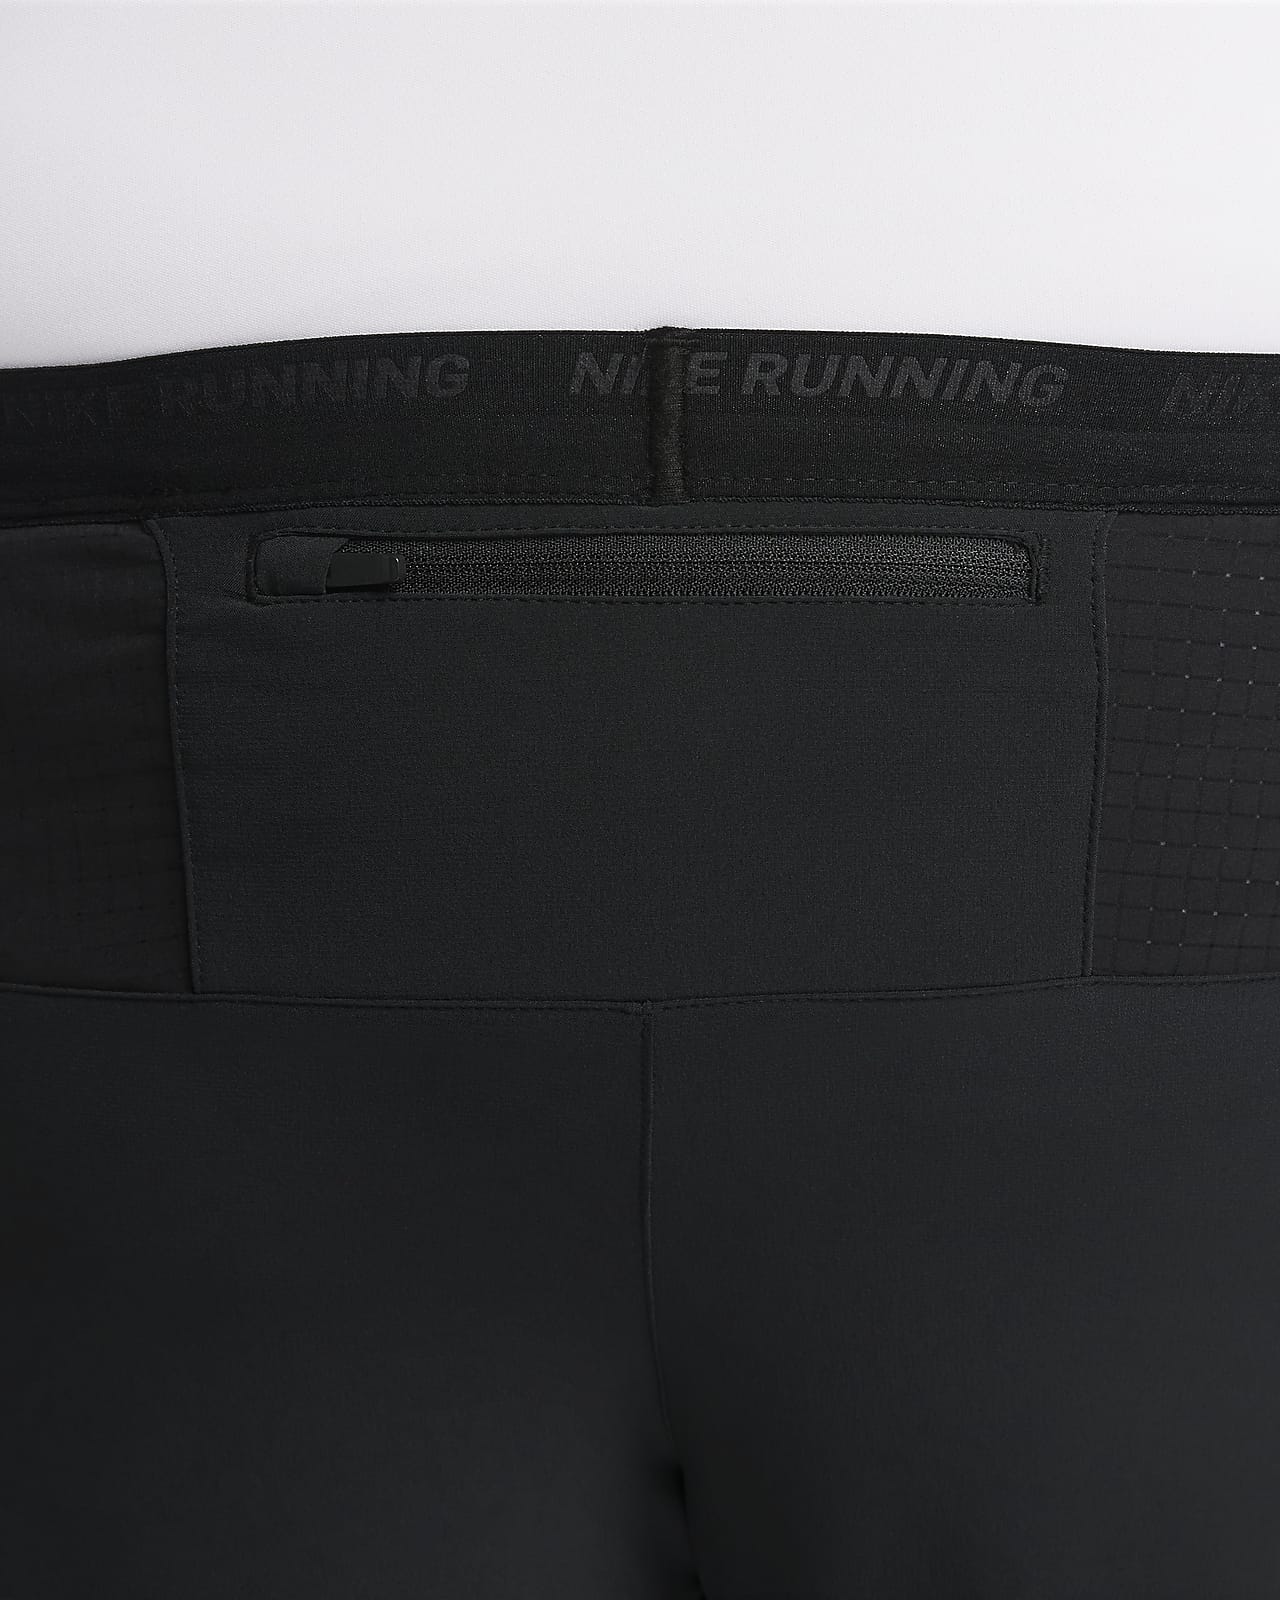 Nike Dri-Fit Phenom Elite Pants Black